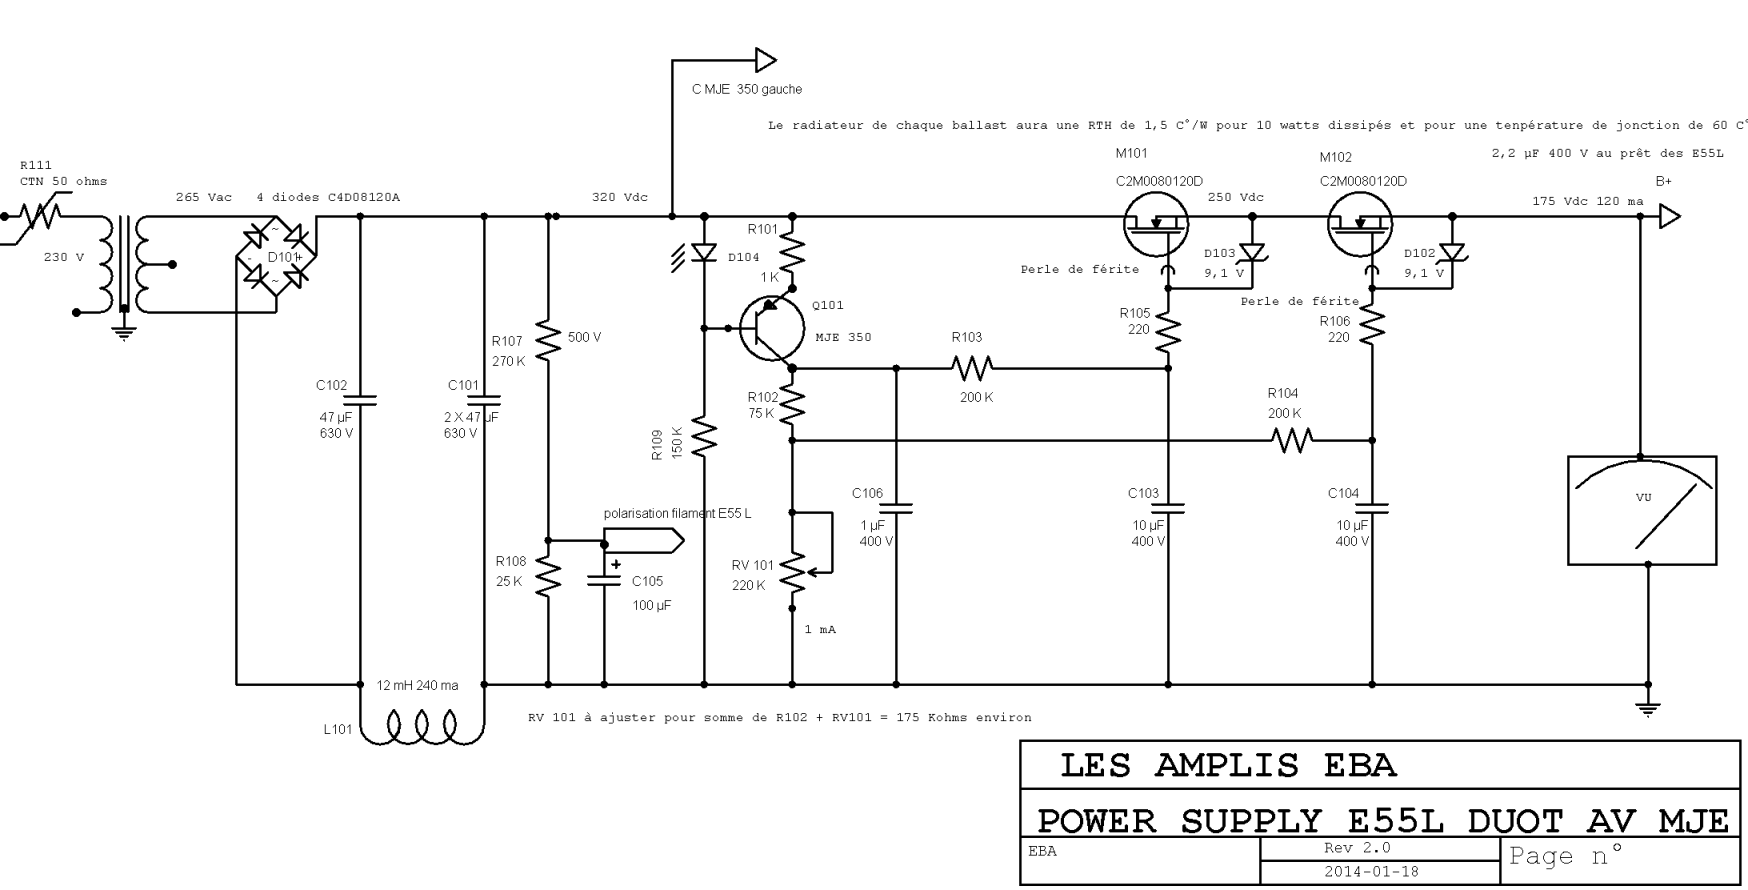 POWER SUPPLY E55L DUO T av MJE.png